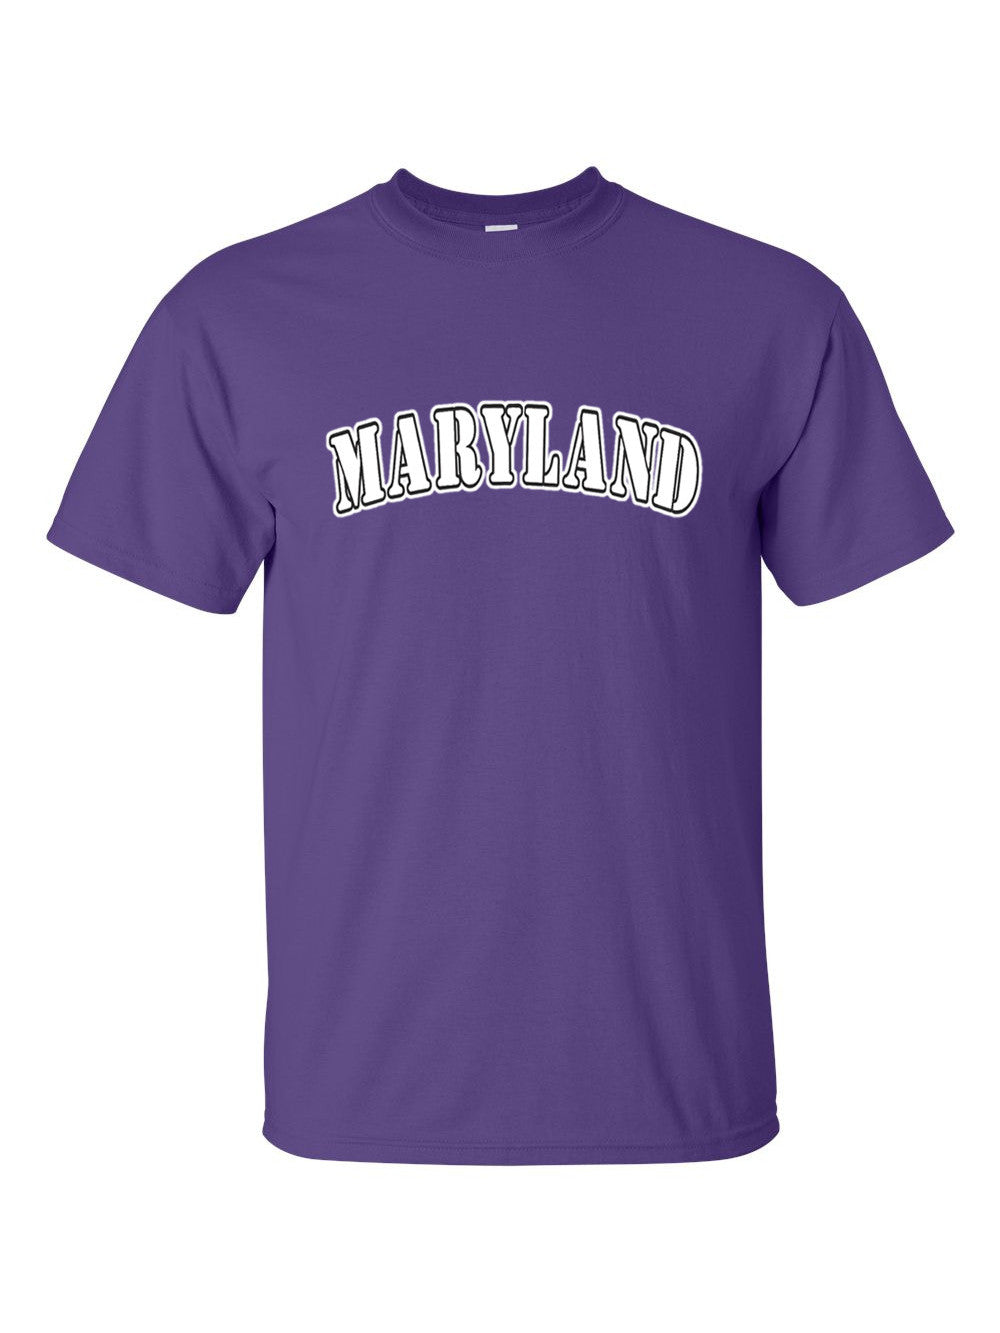 maryland-text-t-shirt-maryland-purple